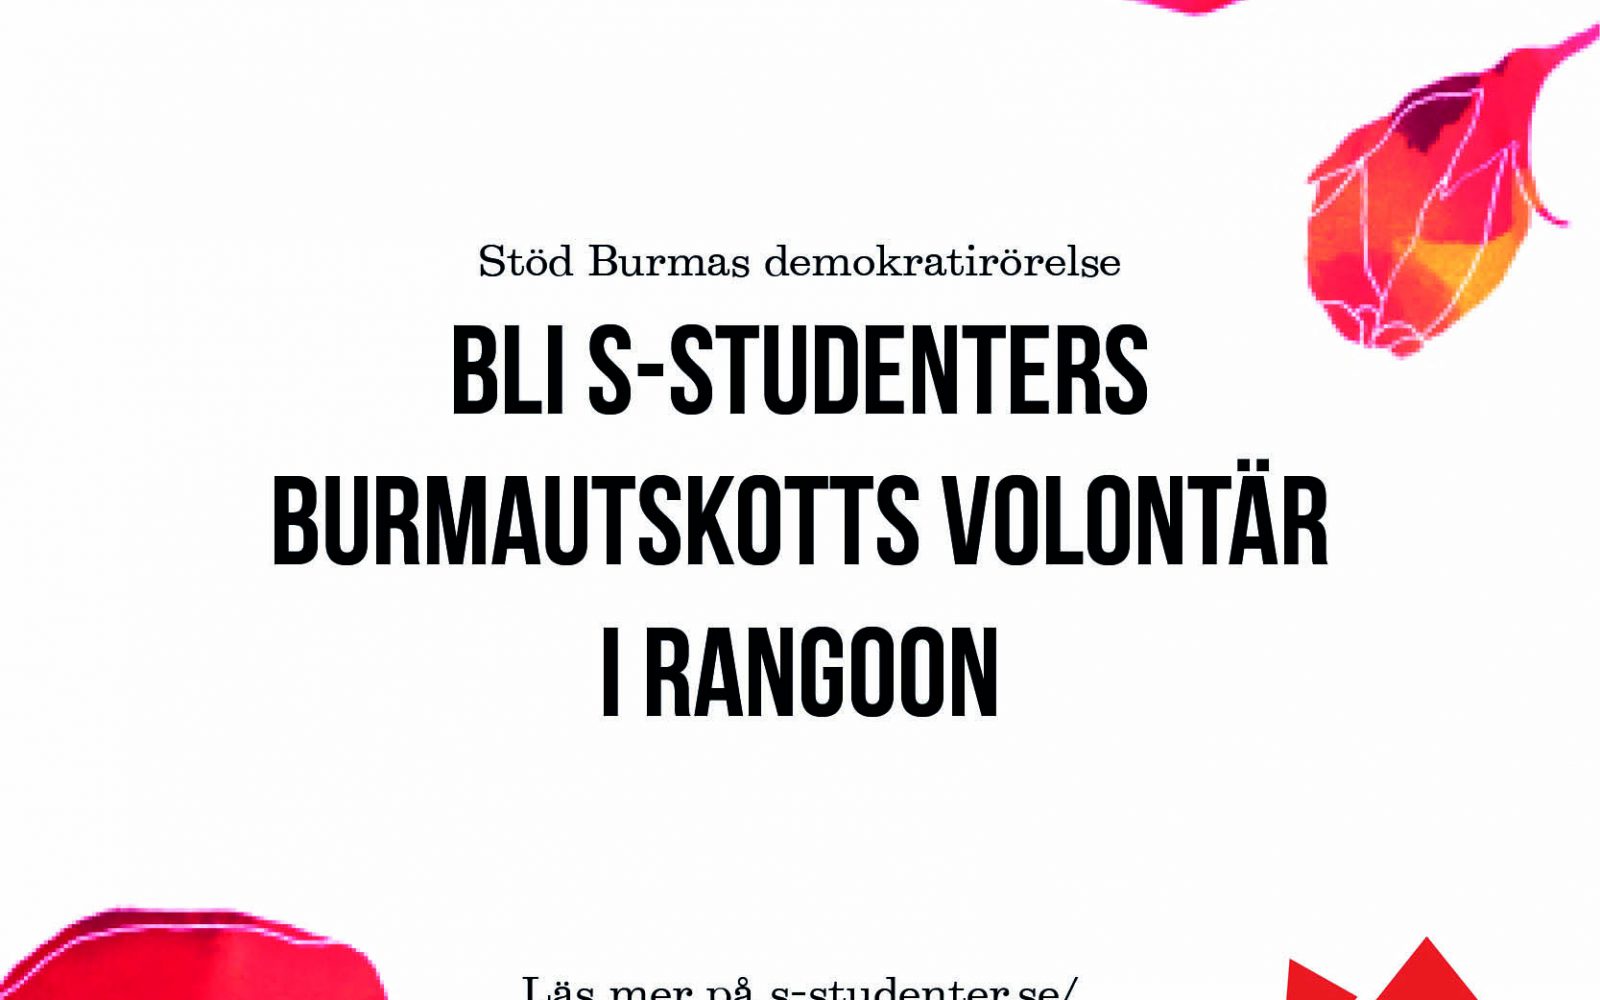 Bli S-Studenters Burmautskotts volontär i Rangoon, Burma